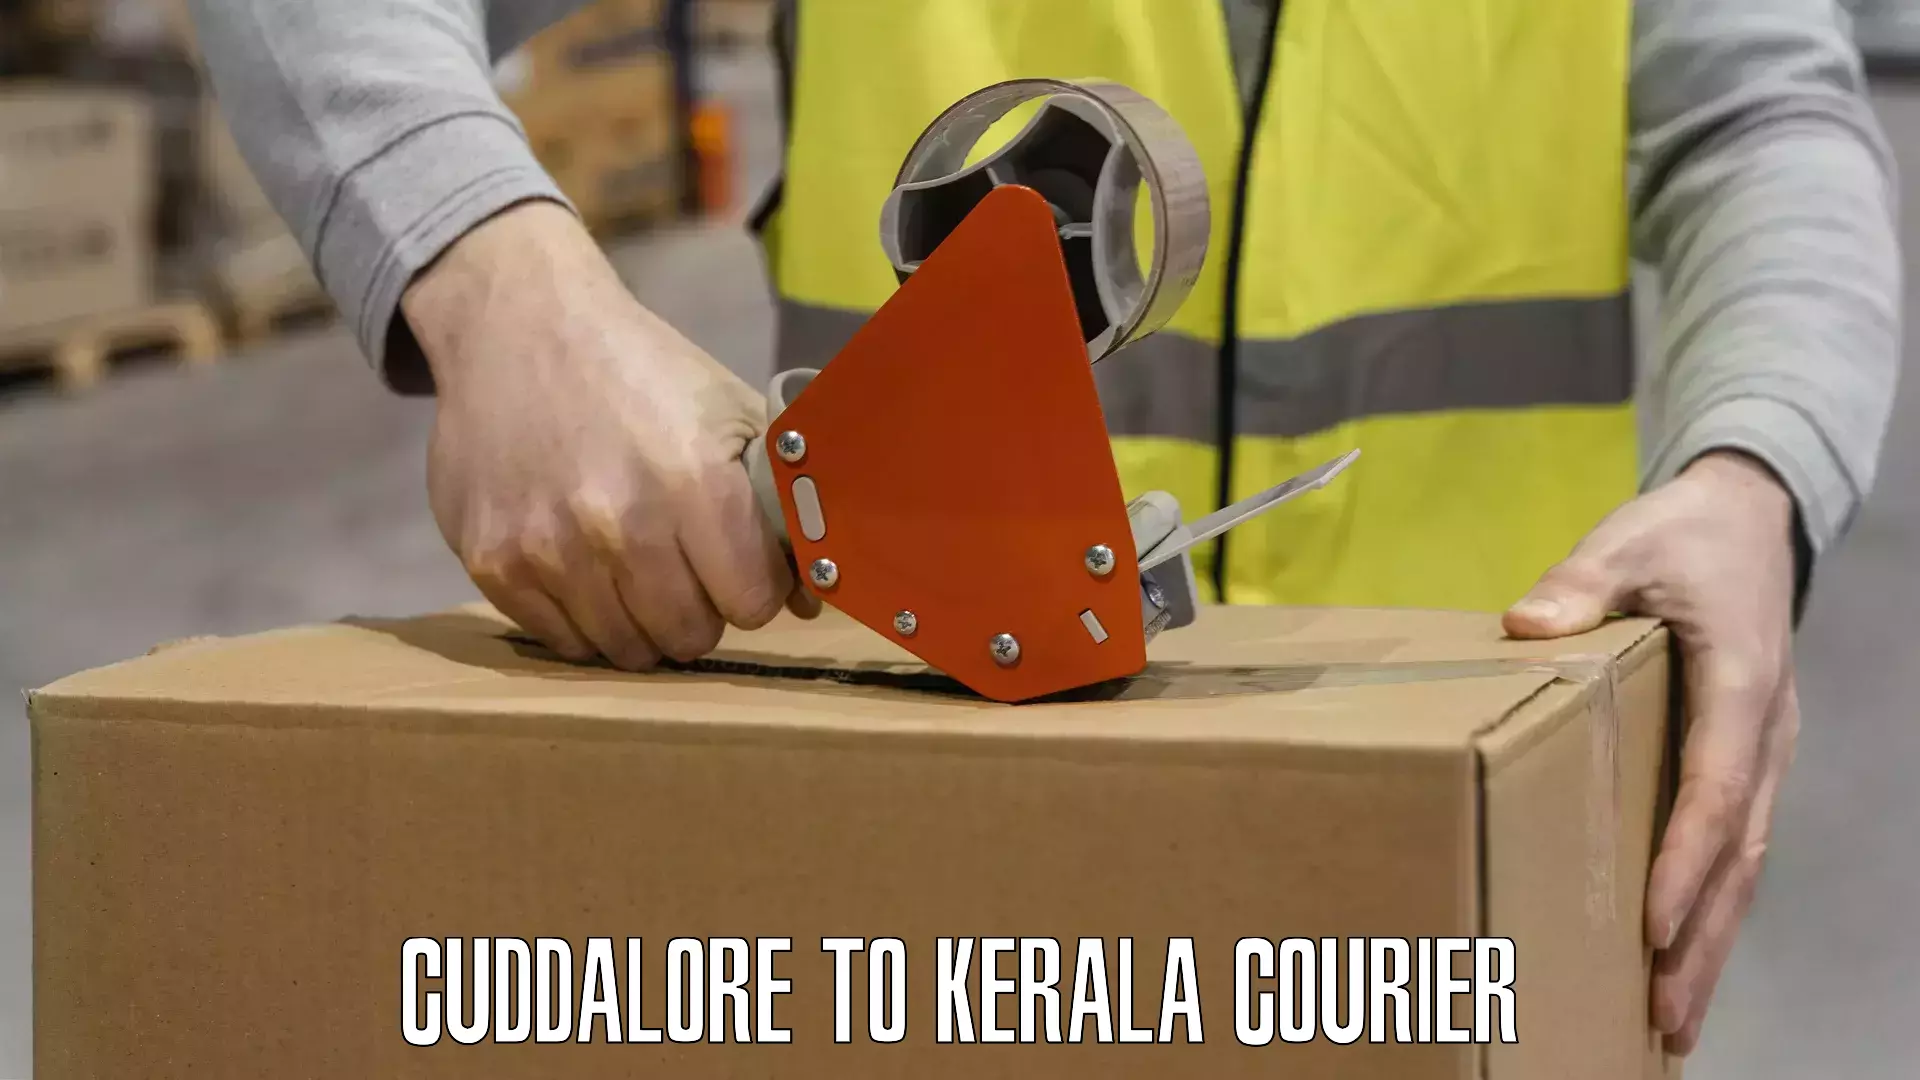 Express delivery capabilities Cuddalore to Kerala